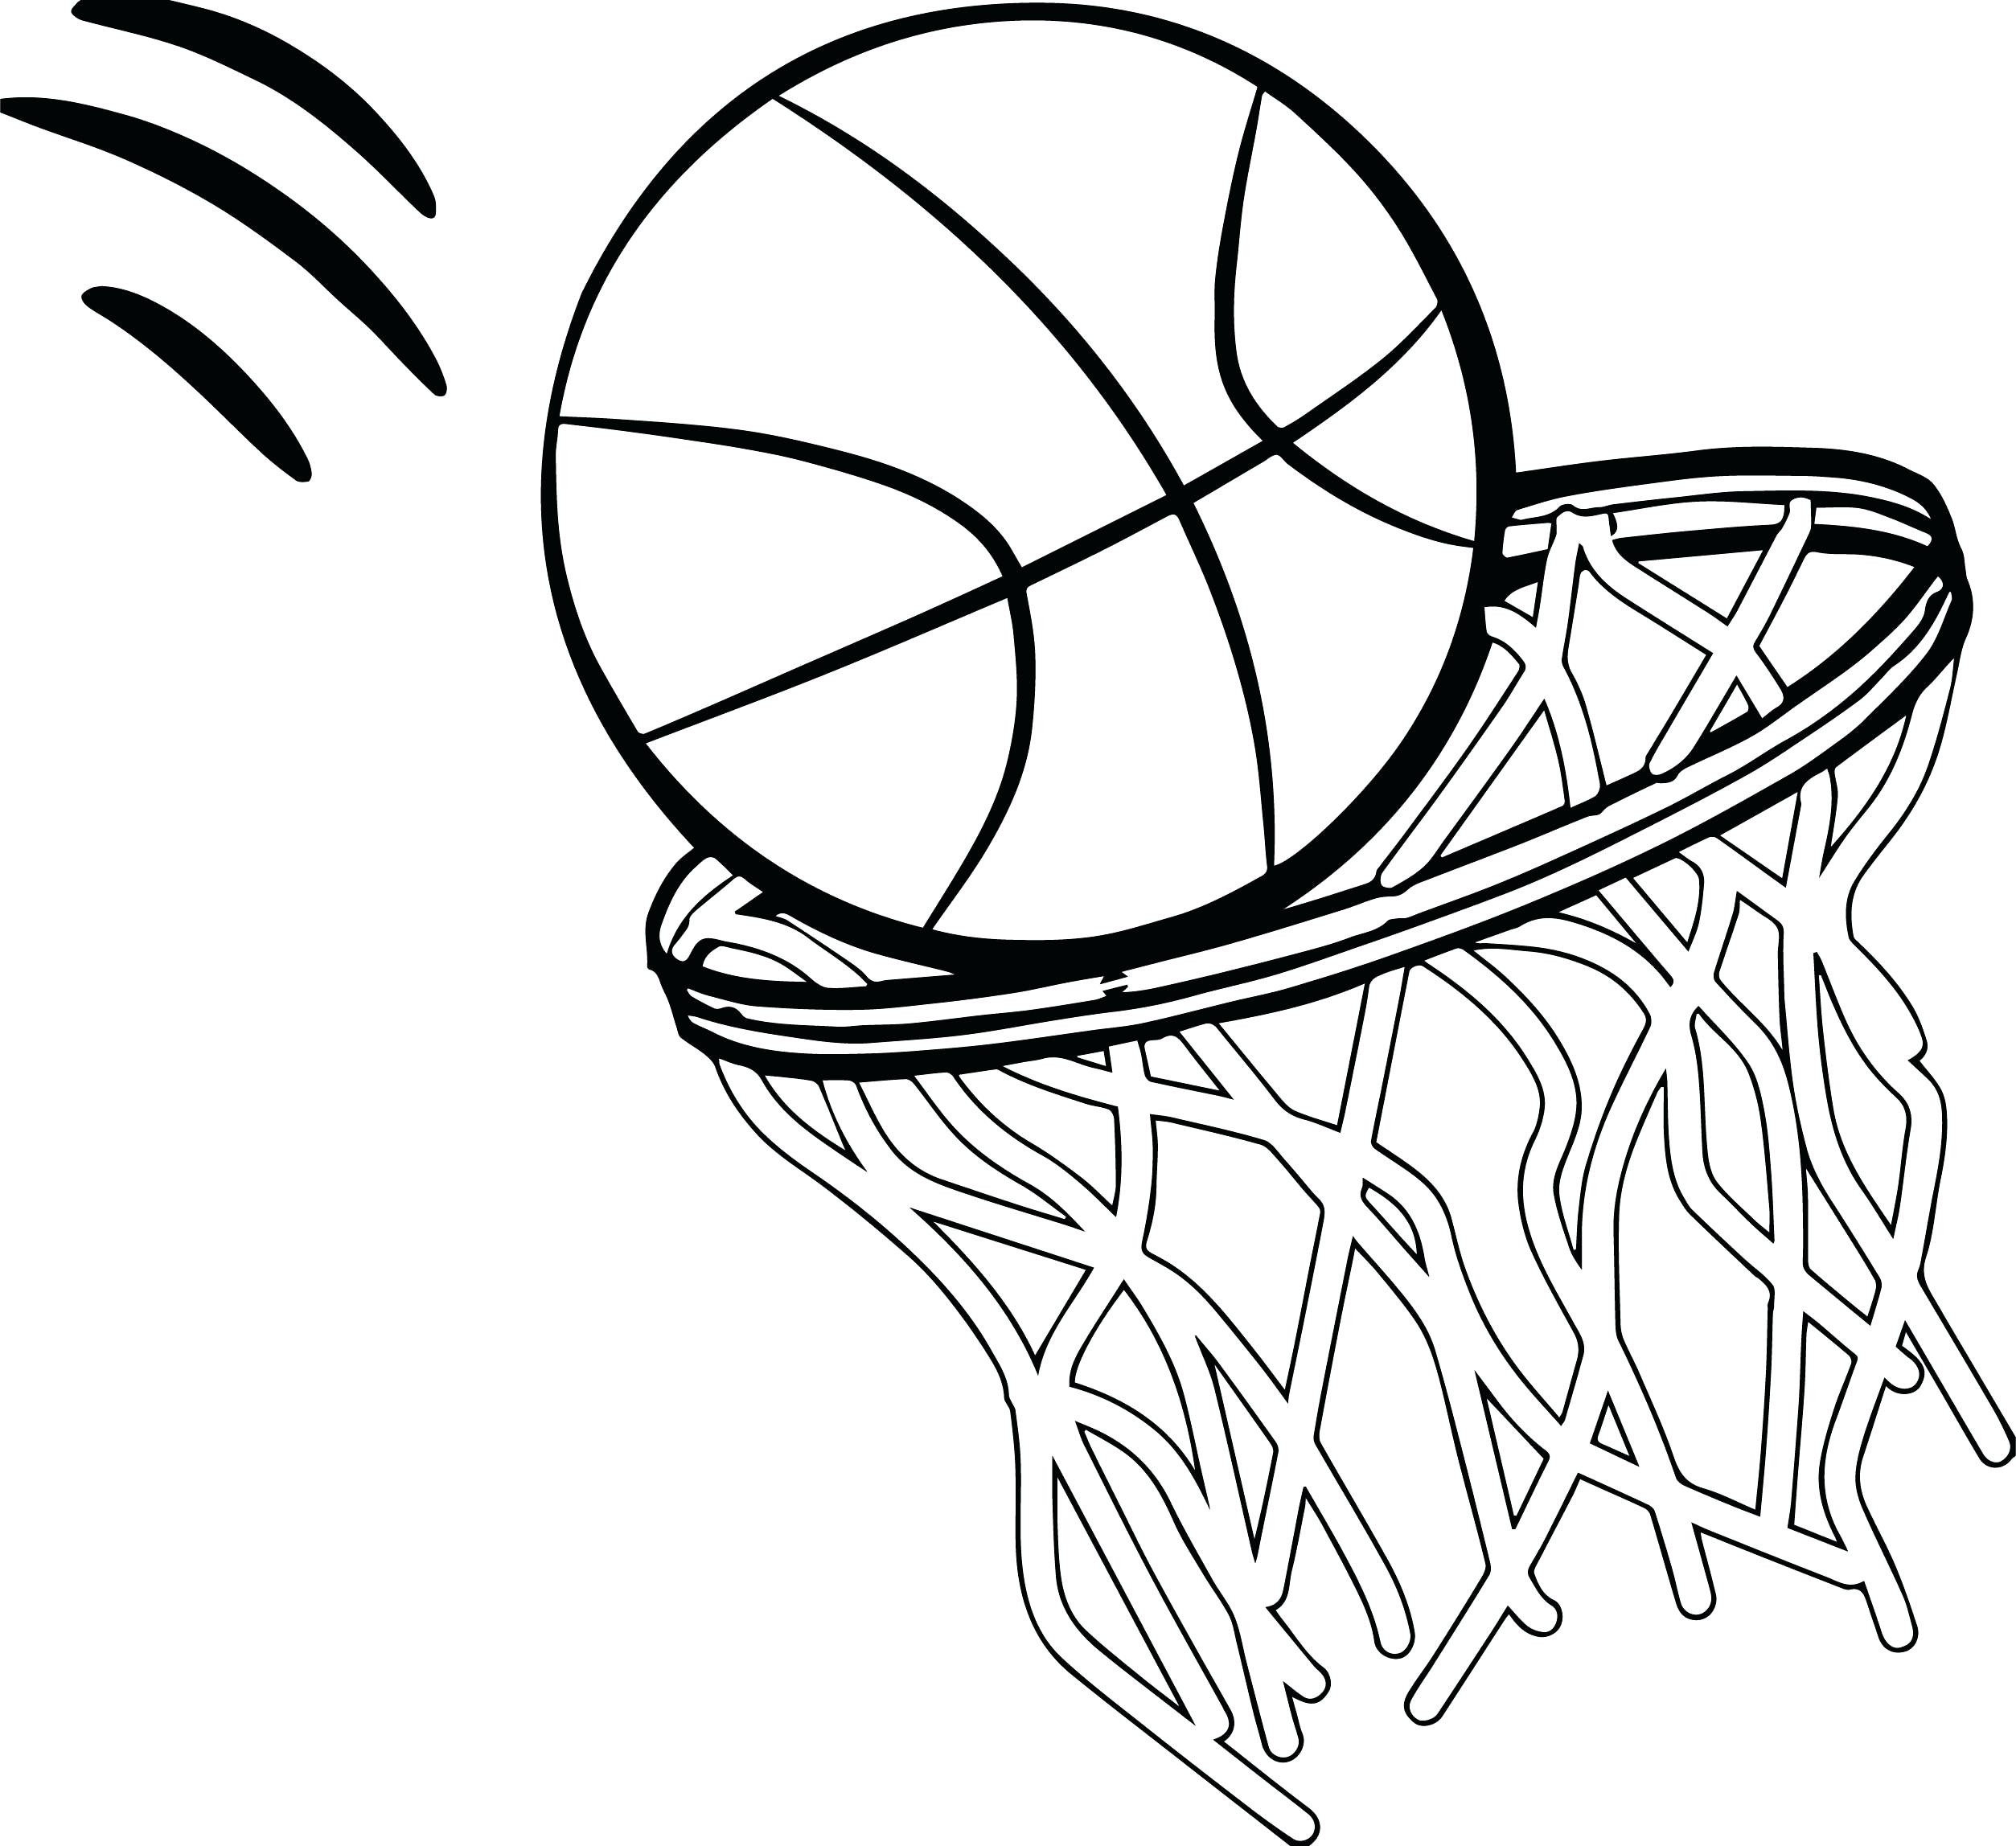 Basketball Hoop Coloring Page at Free printable